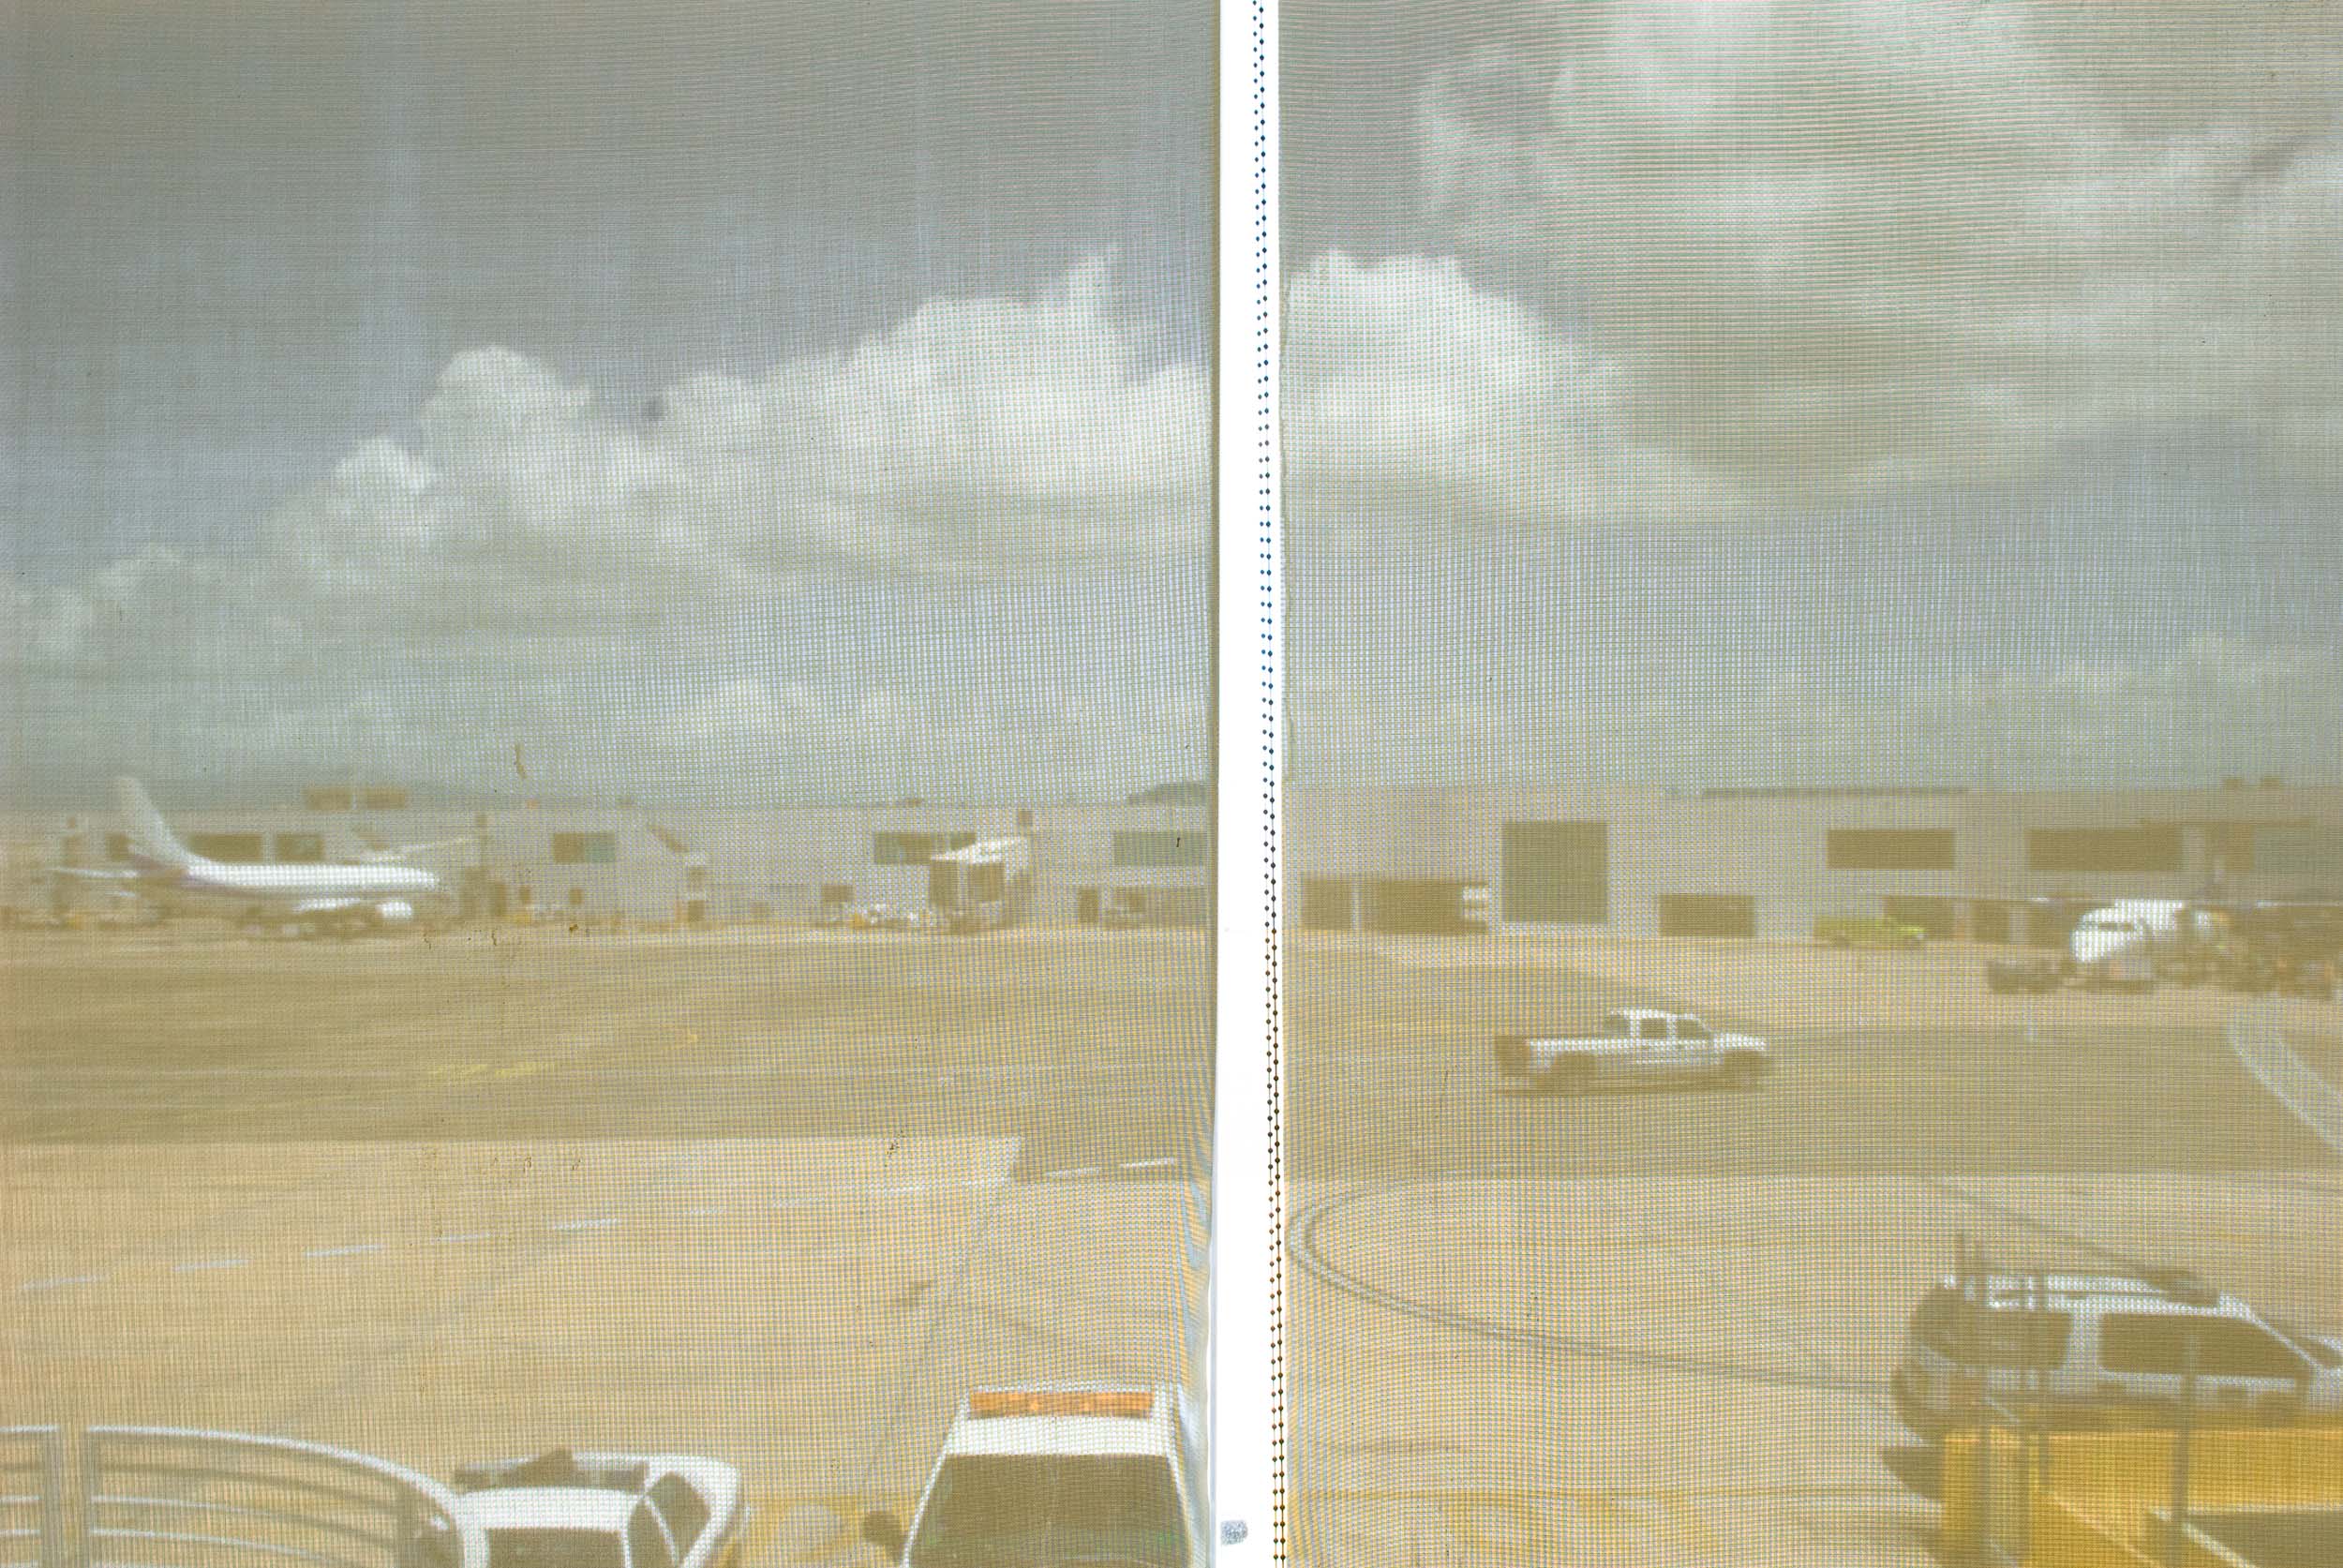 San Juan Airport